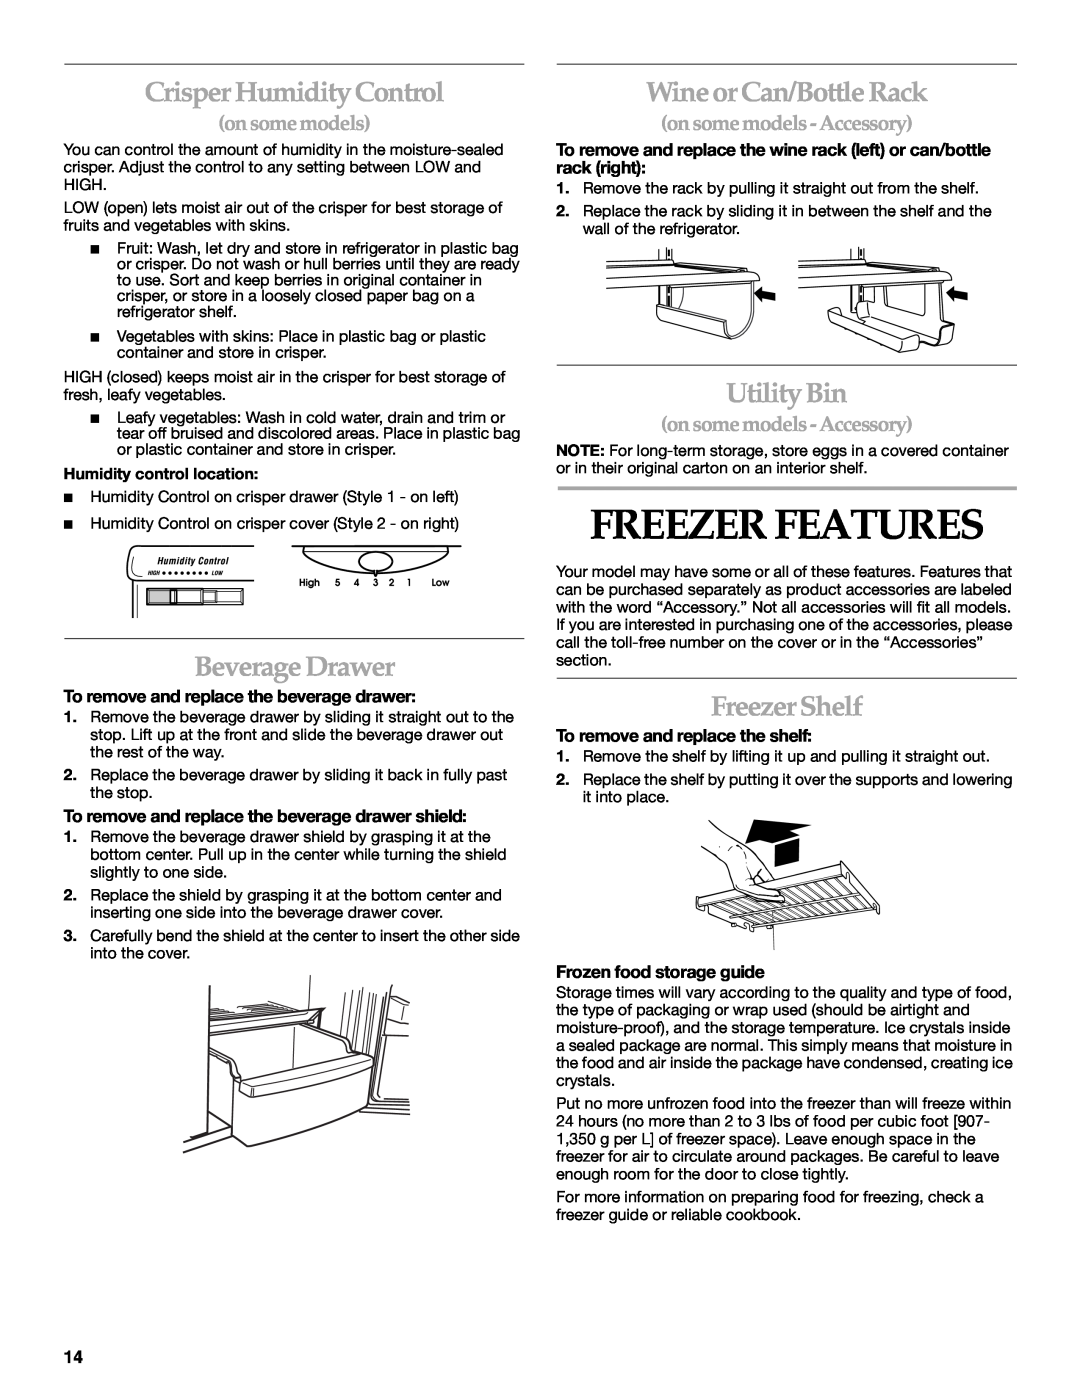 Whirlpool WF-NL300 manual Freezer Features, Crisper Humidity Control, Beverage Drawer, Wine or Can/Bottle Rack, Utility Bin 